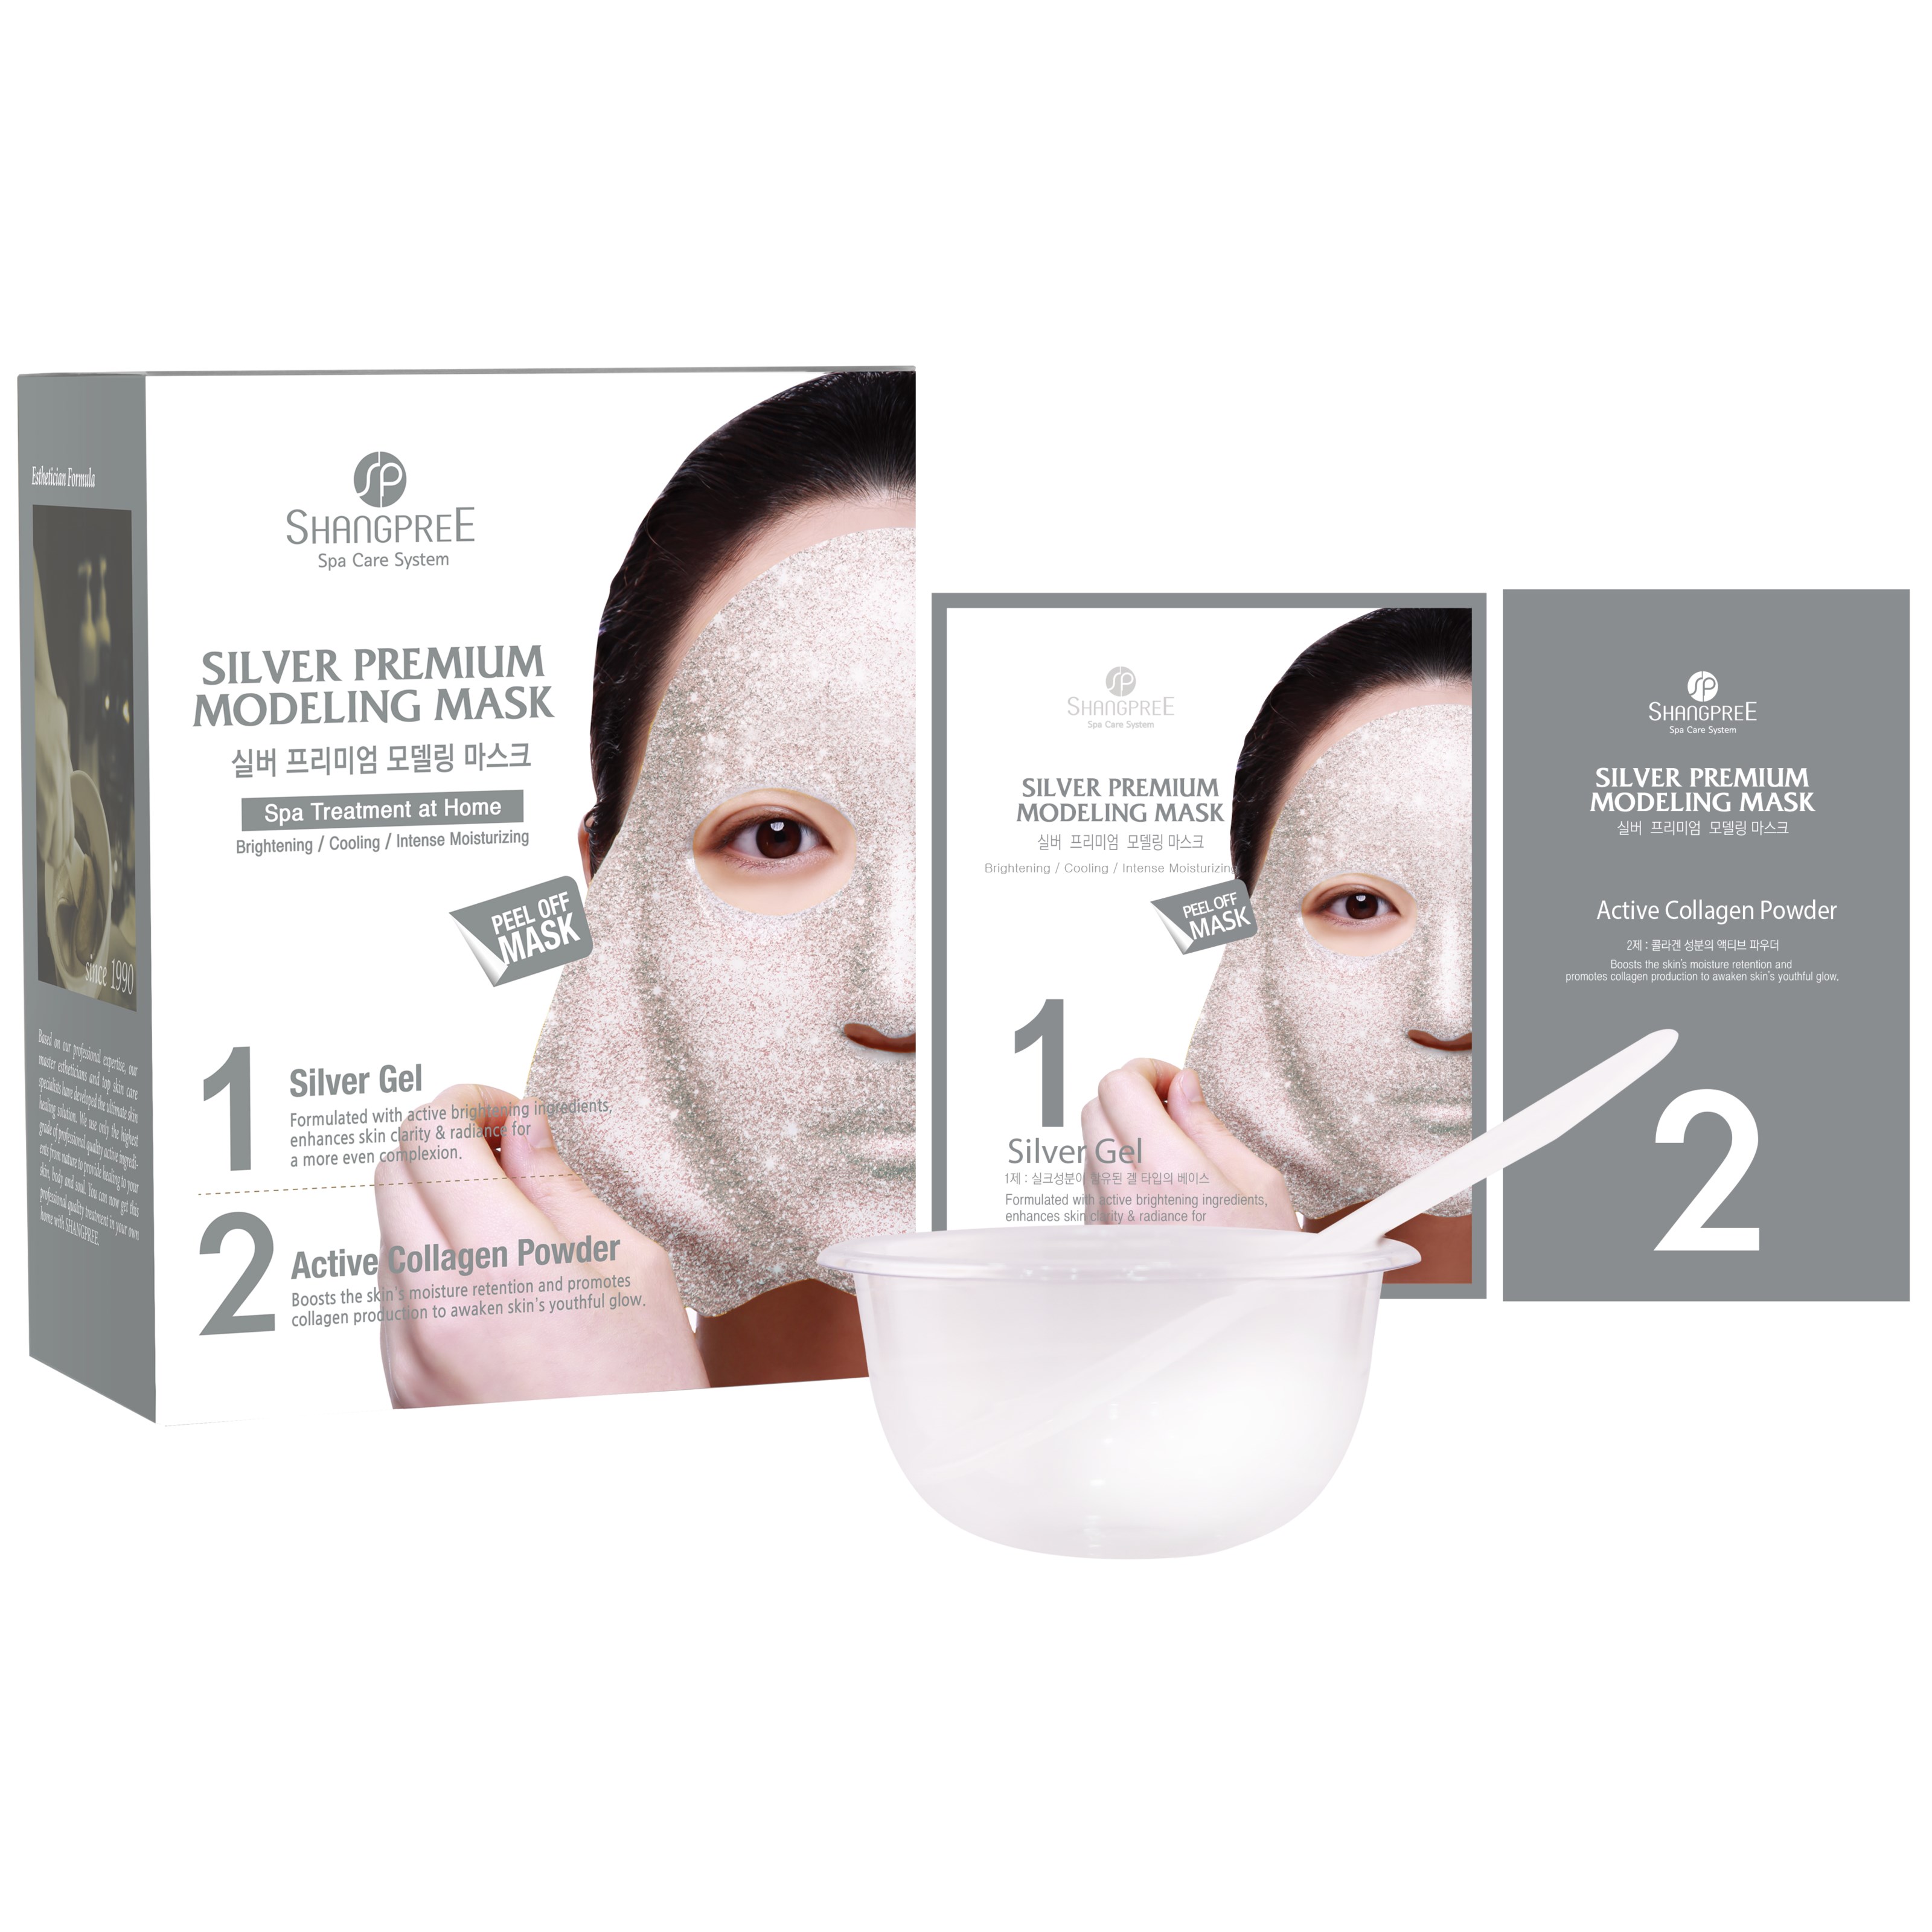 Shangpree Premium Modeling Mask Premium Modeling Silver Mask (Inc